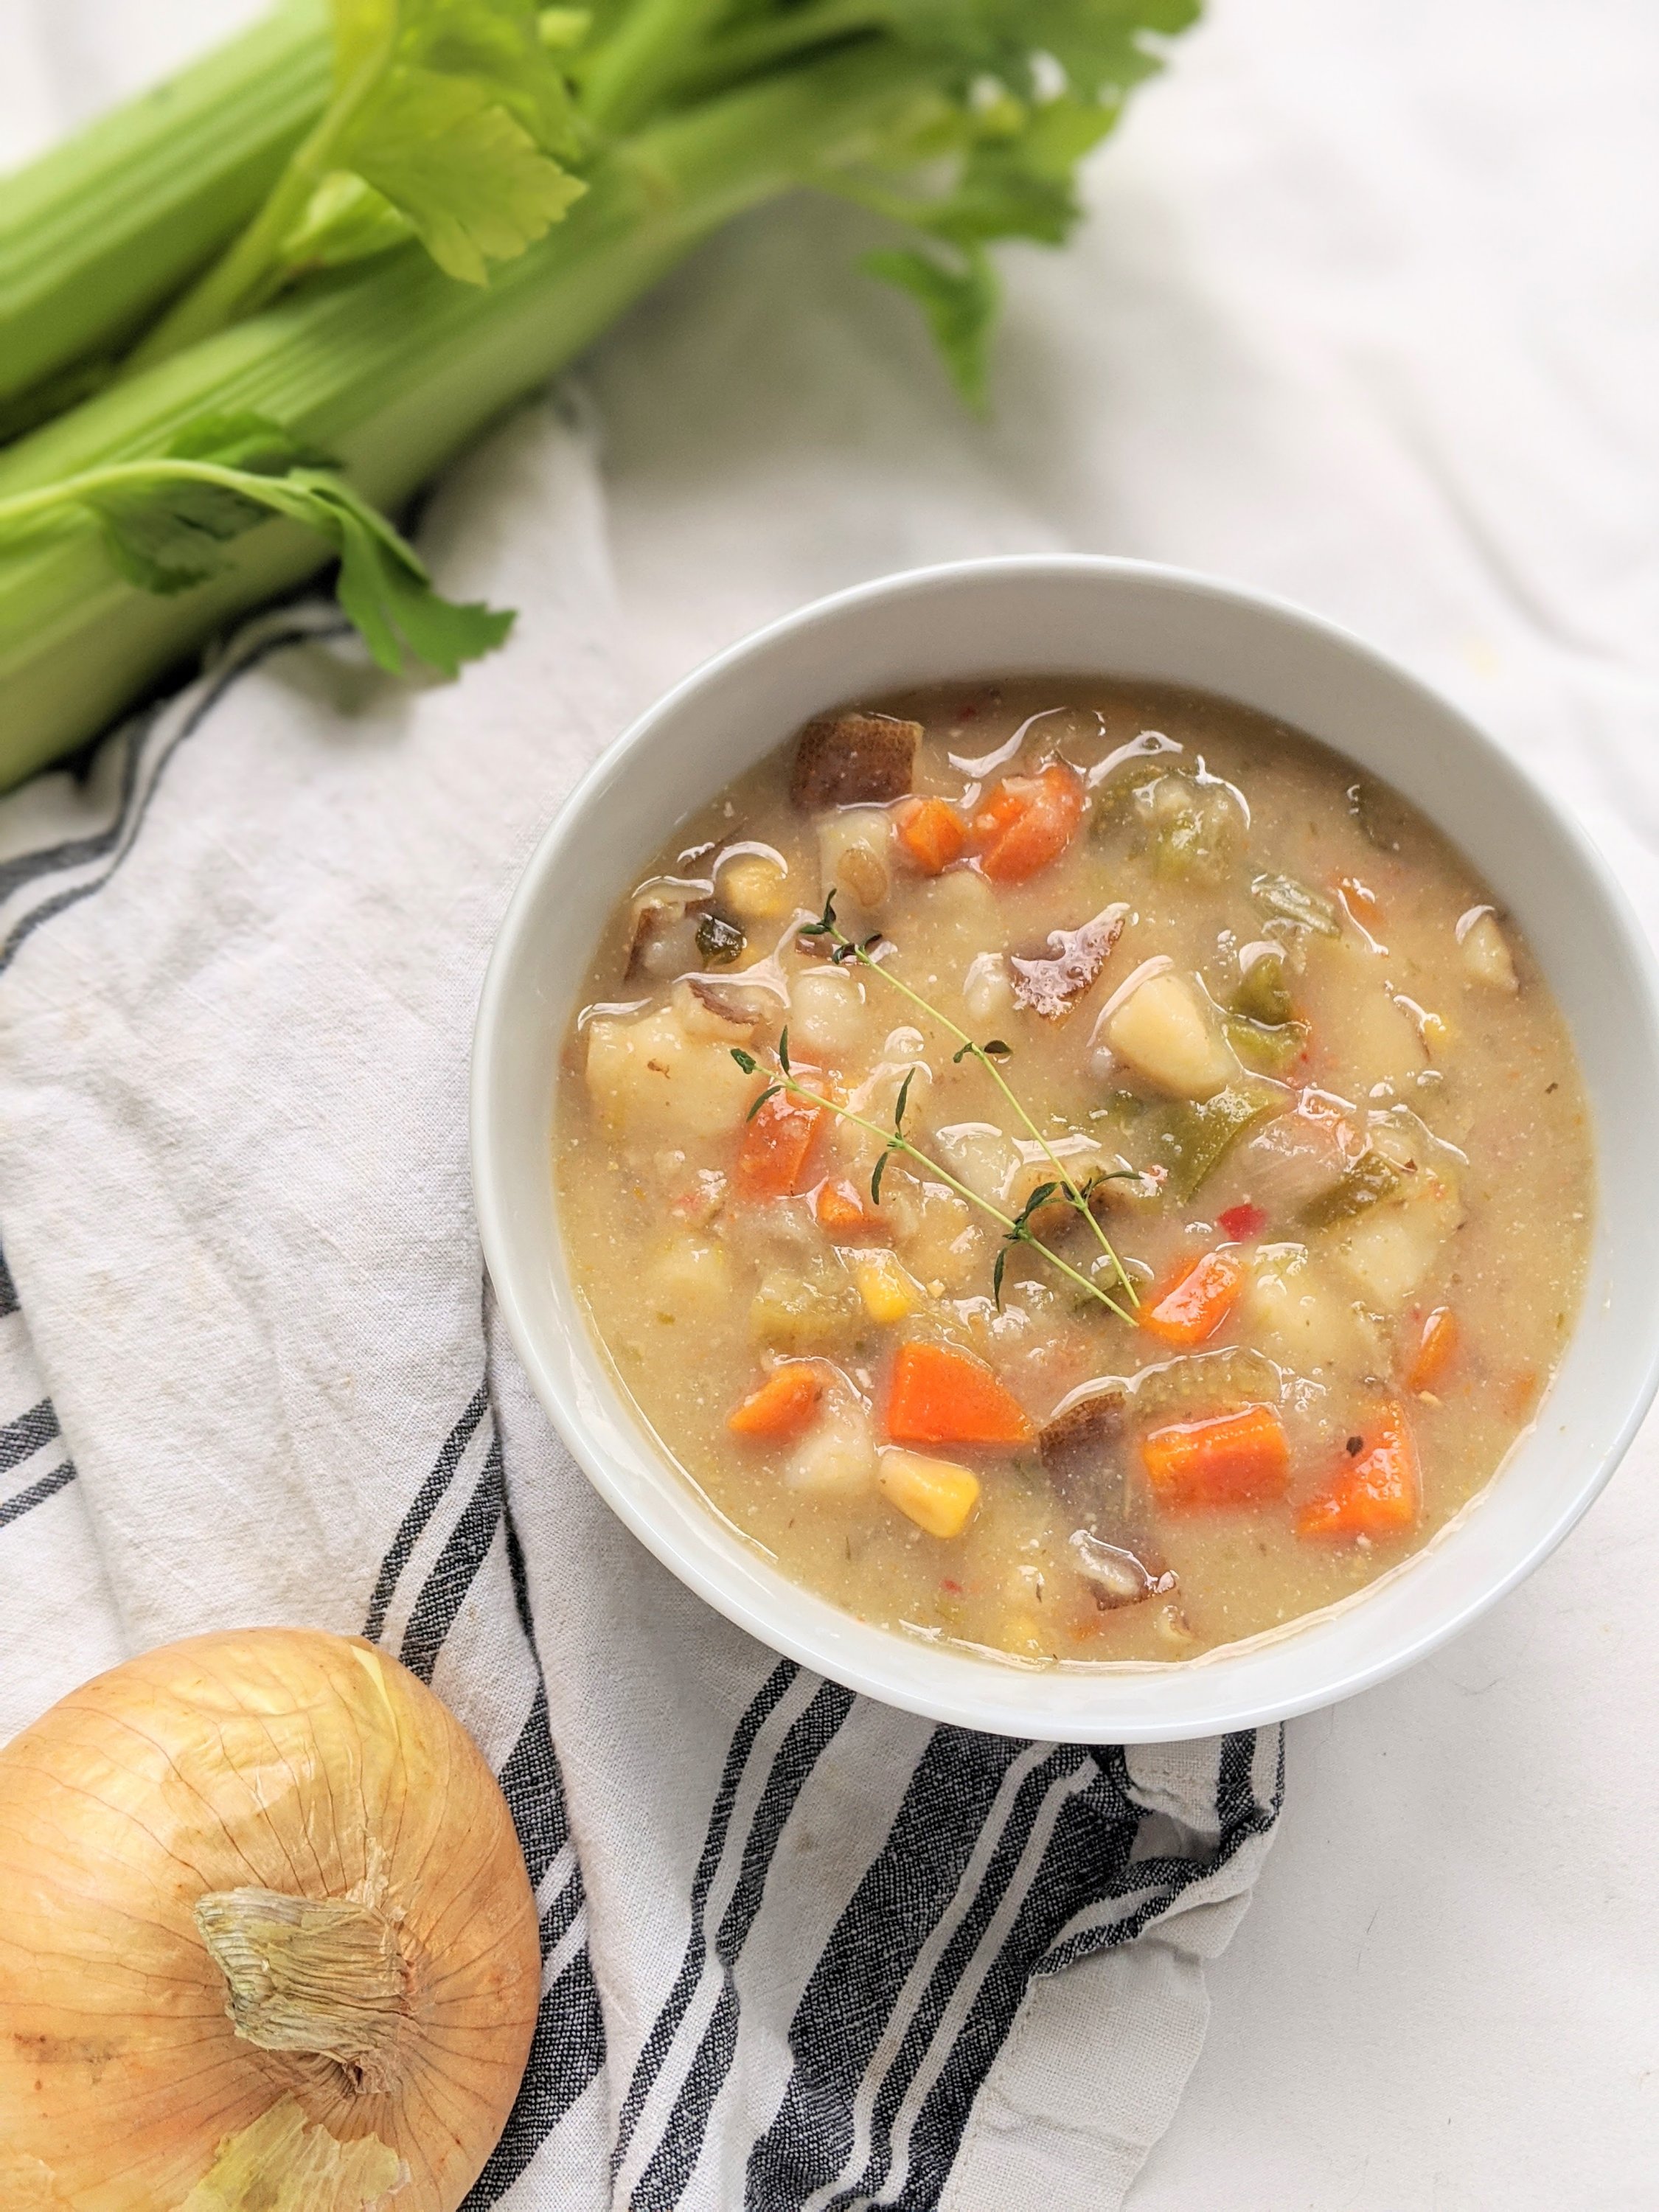 healthy potato soup recipe creamy vegan vegetable soup instant pot slow cooker pressure cooker stove top instructions